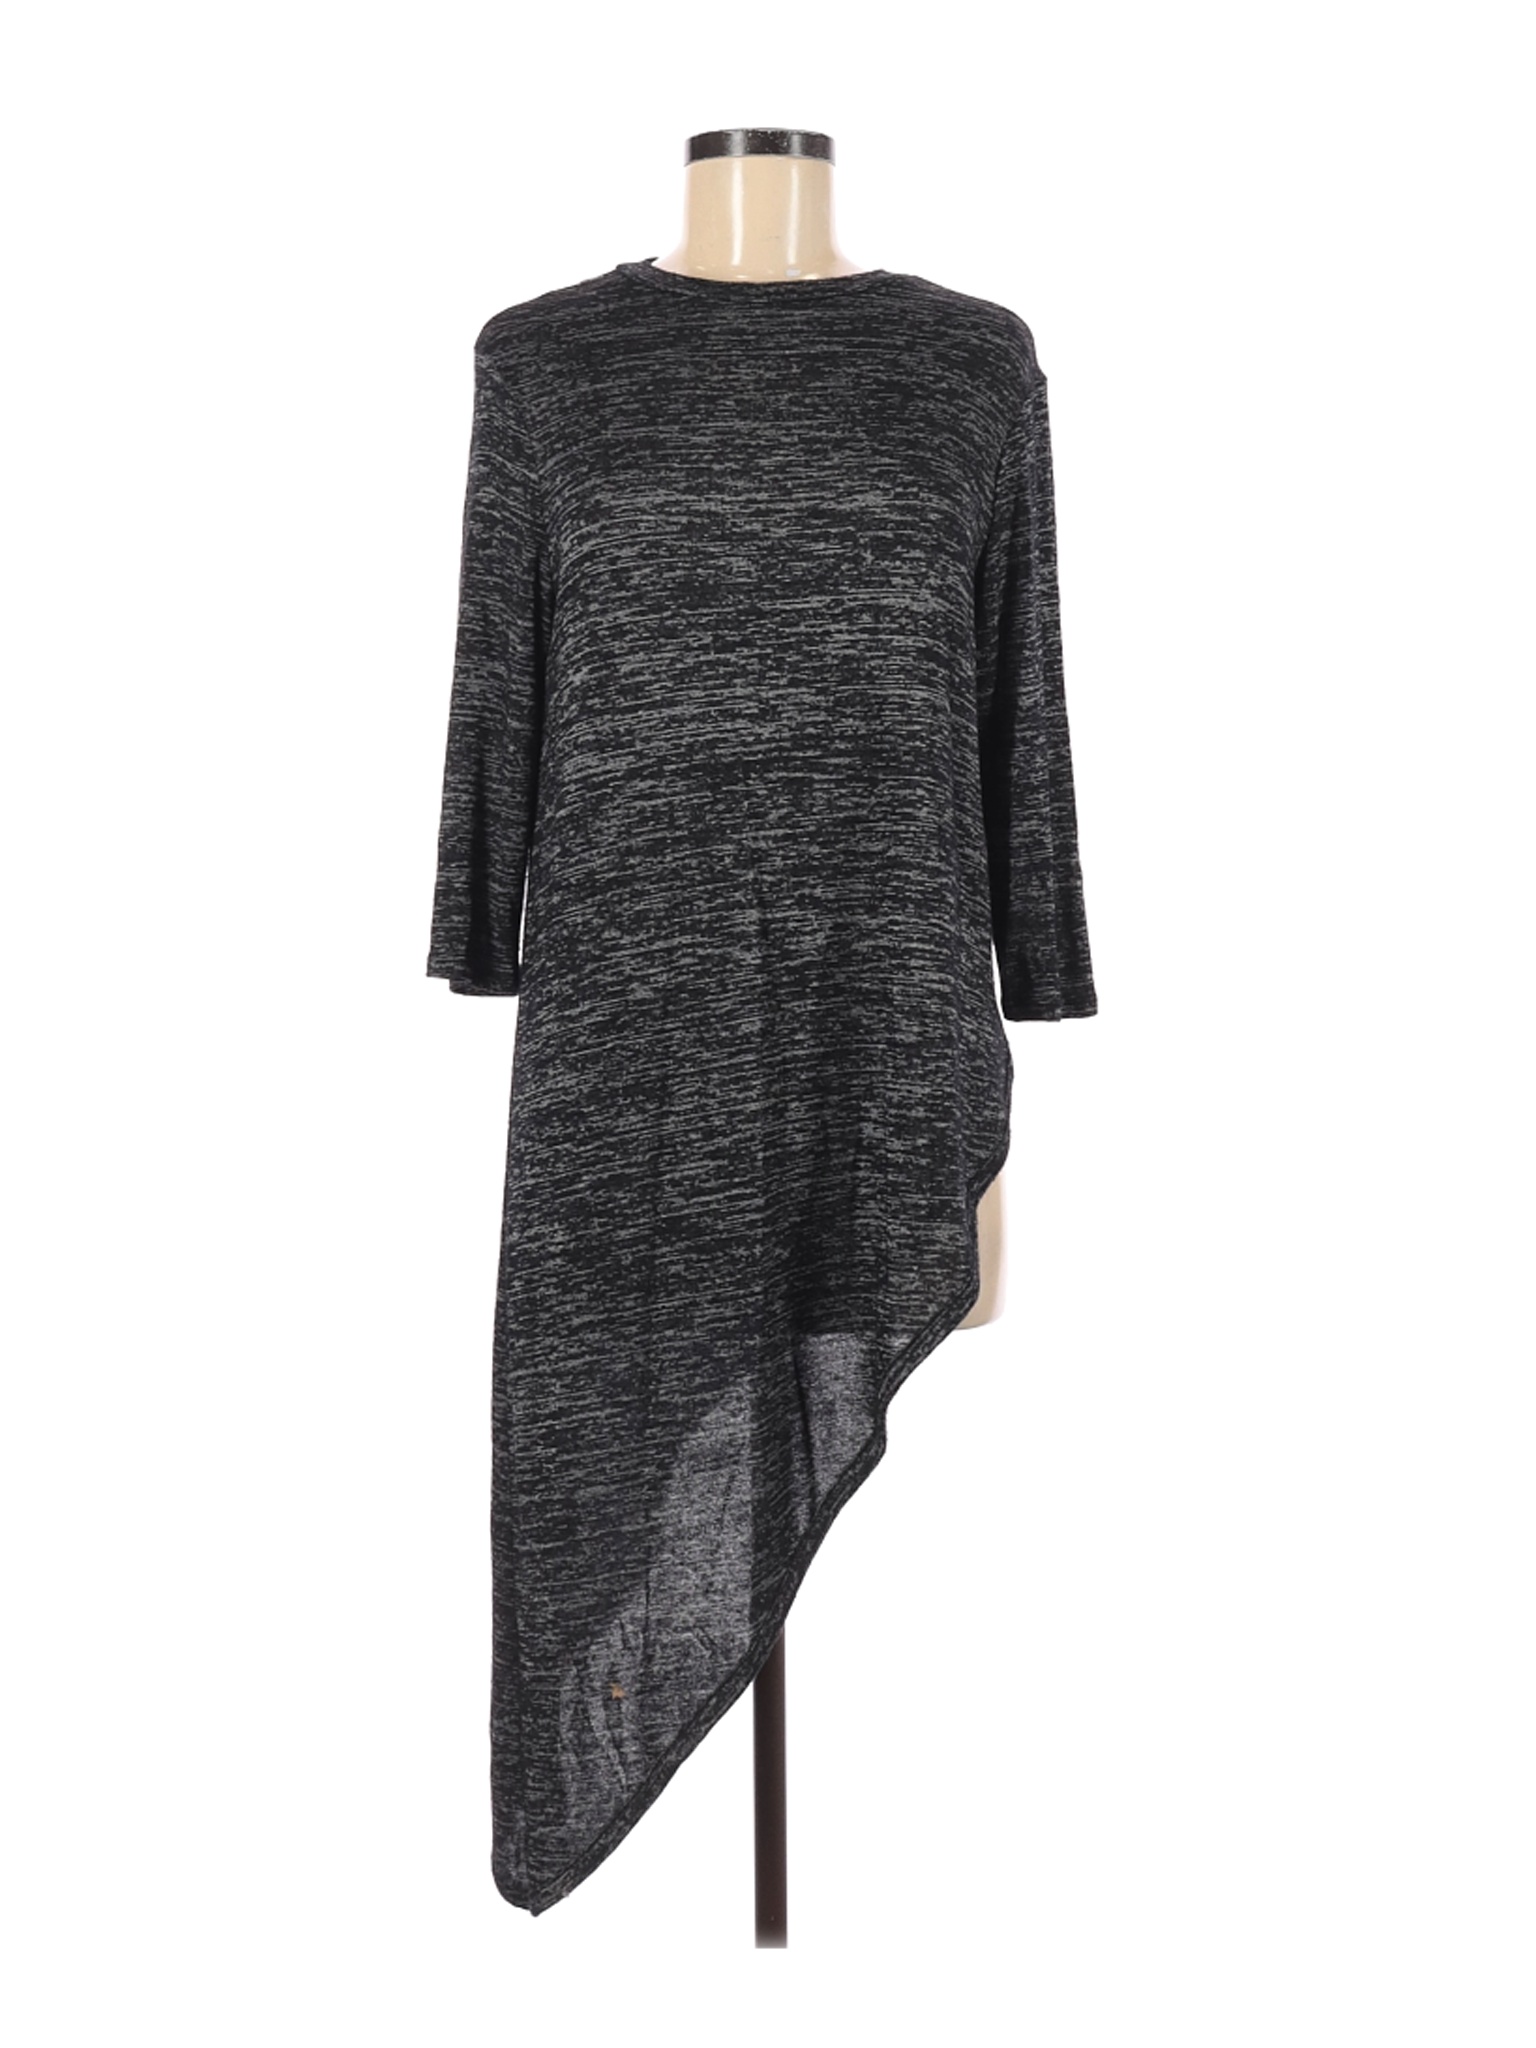 Cha Cha Vente Women Gray Long Sleeve Top M | eBay